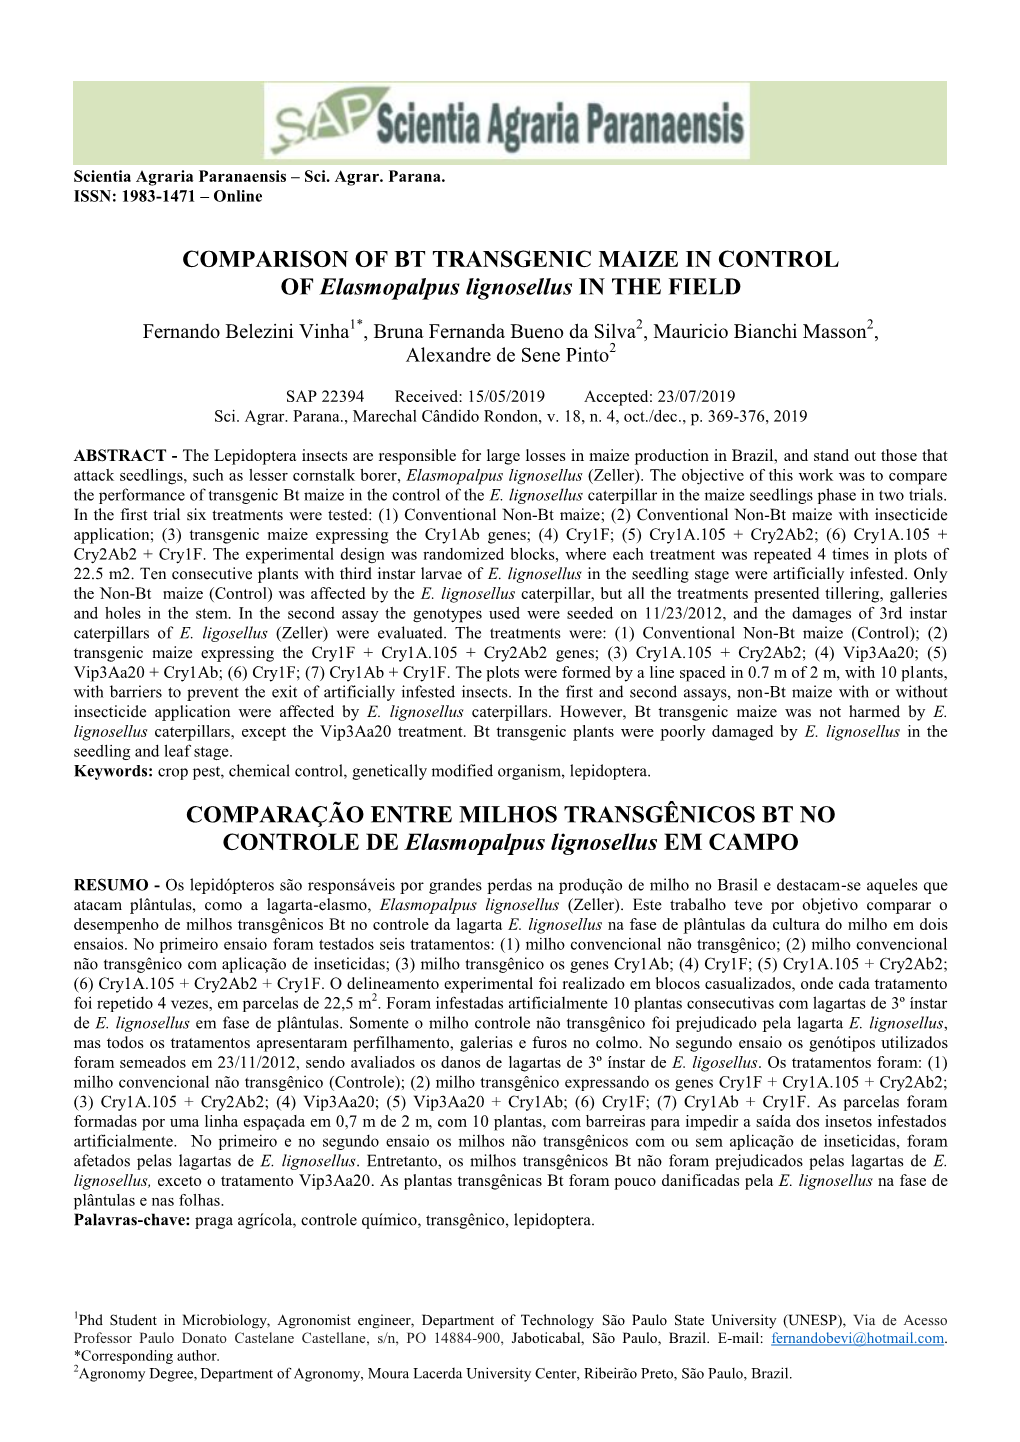 COMPARISON of BT TRANSGENIC MAIZE in CONTROL of Elasmopalpus Lignosellus in the FIELD